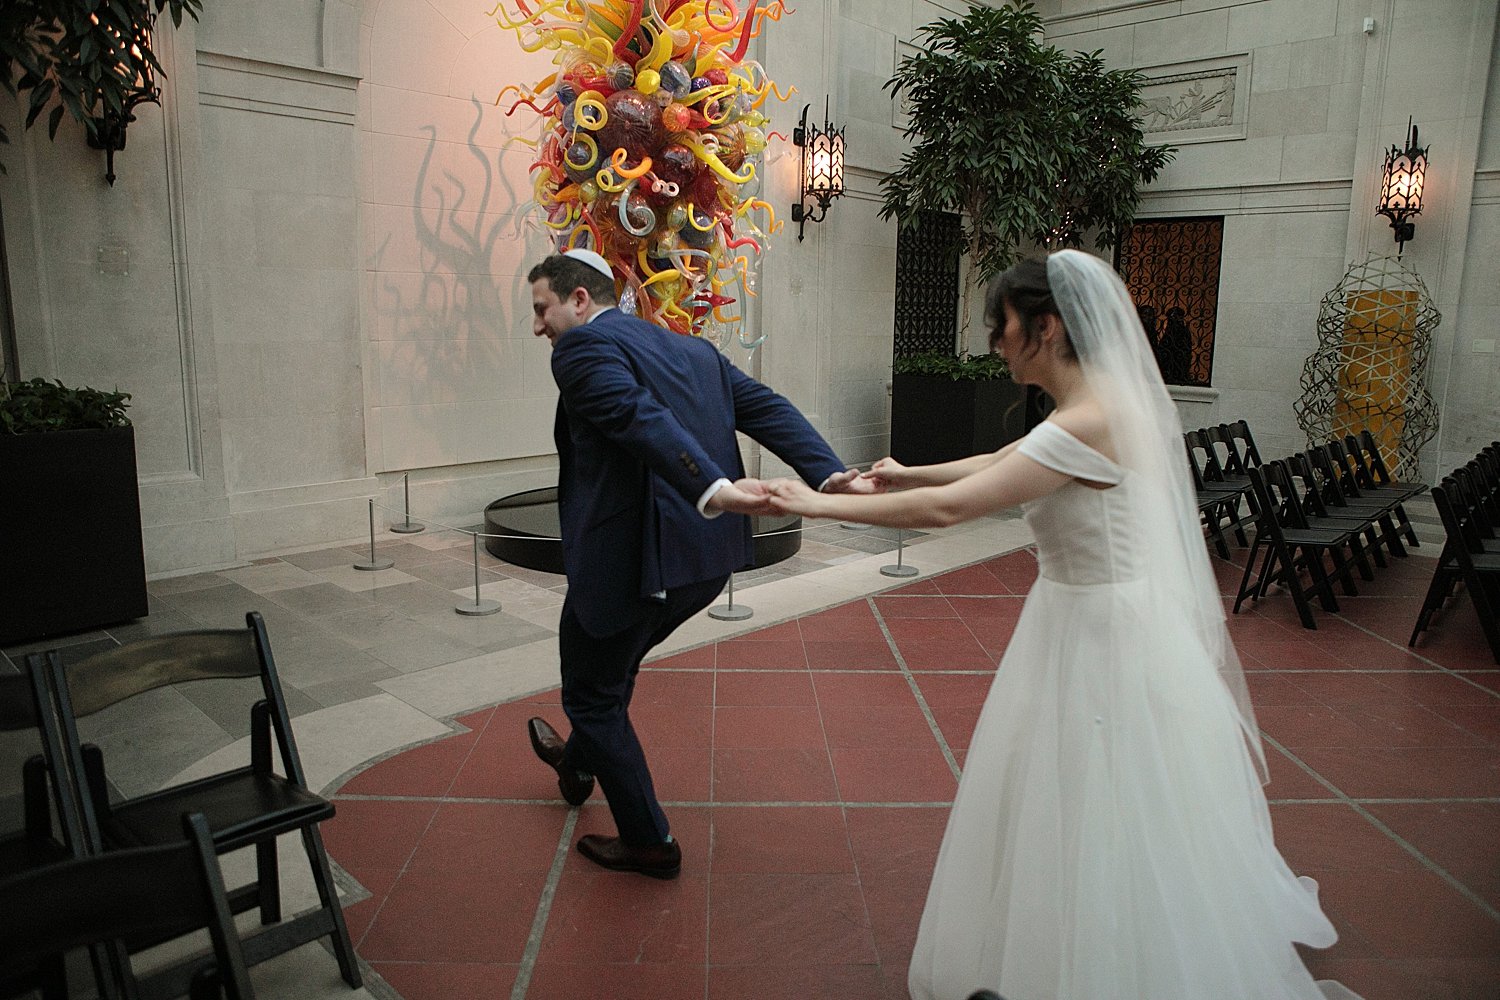 Chicago art musuem documentary wedding photographer  0028.jpg